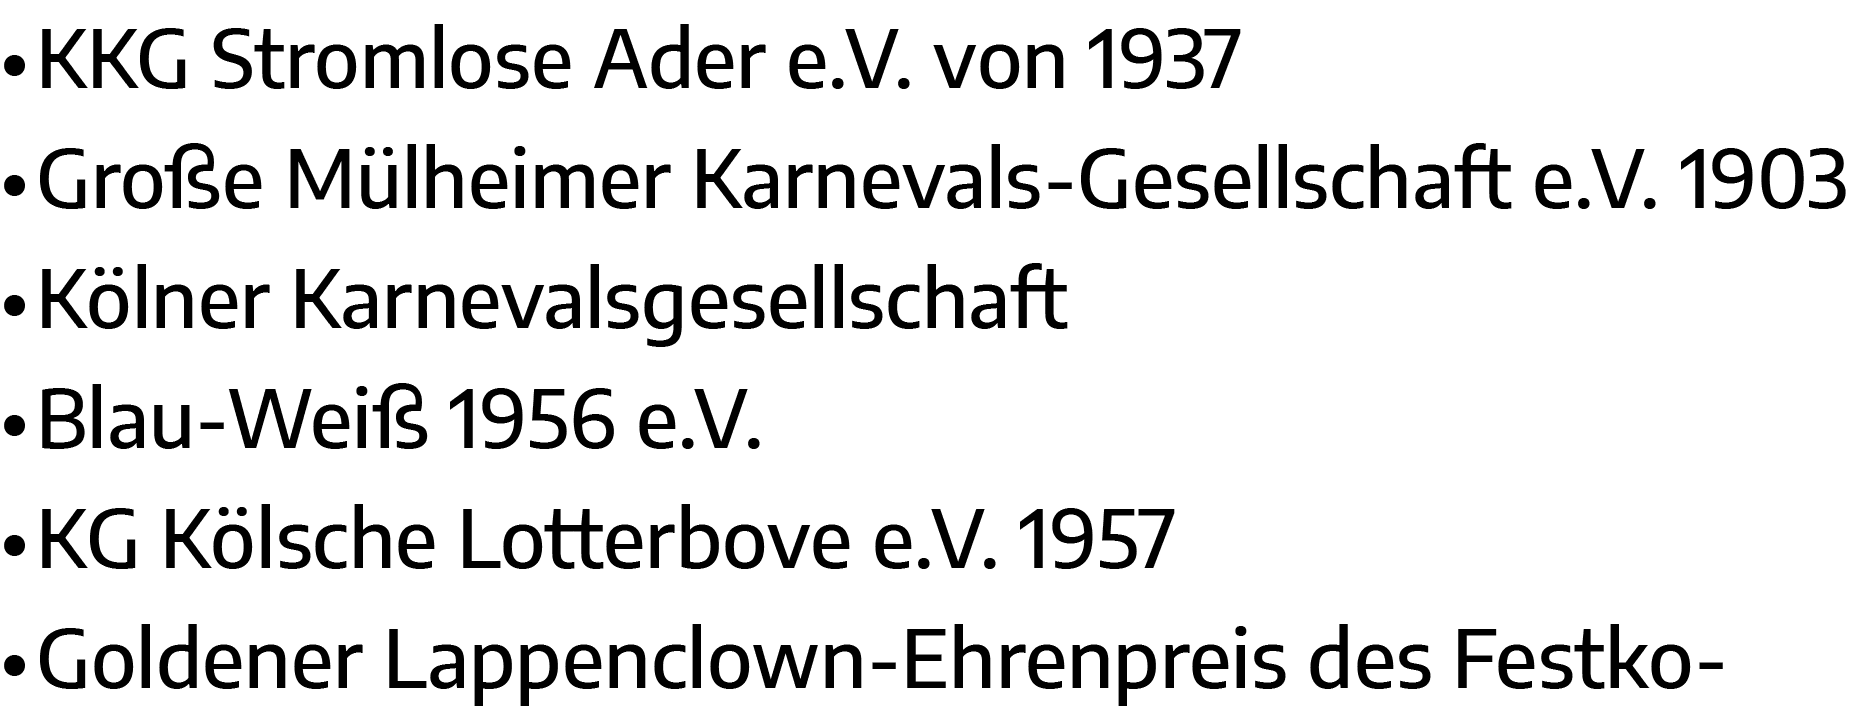   KKG Stromlose Ader e V  von 1937   Große Mülheimer Karnevals- Gesellschaft e V  1903   Kölner Karnevalsgesellschaft   